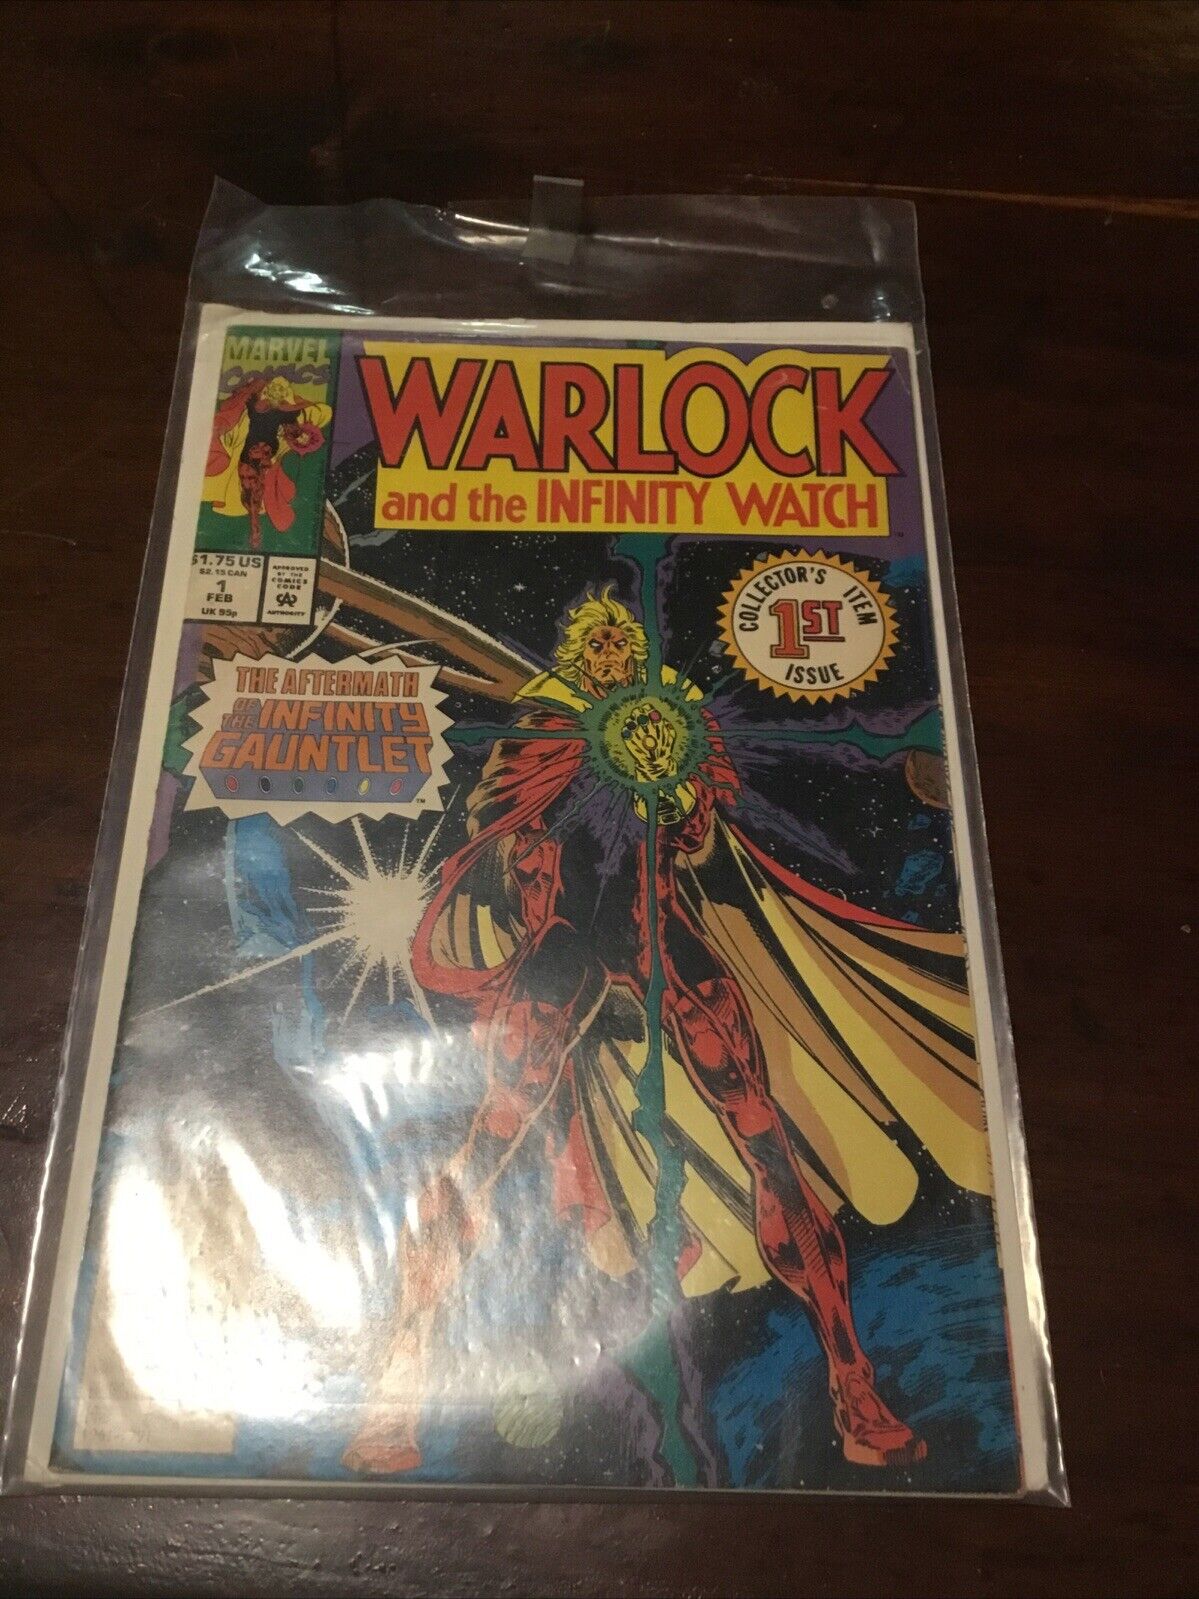 Warlock and the Infinity Watch #1 (Marvel Comics February 1992)